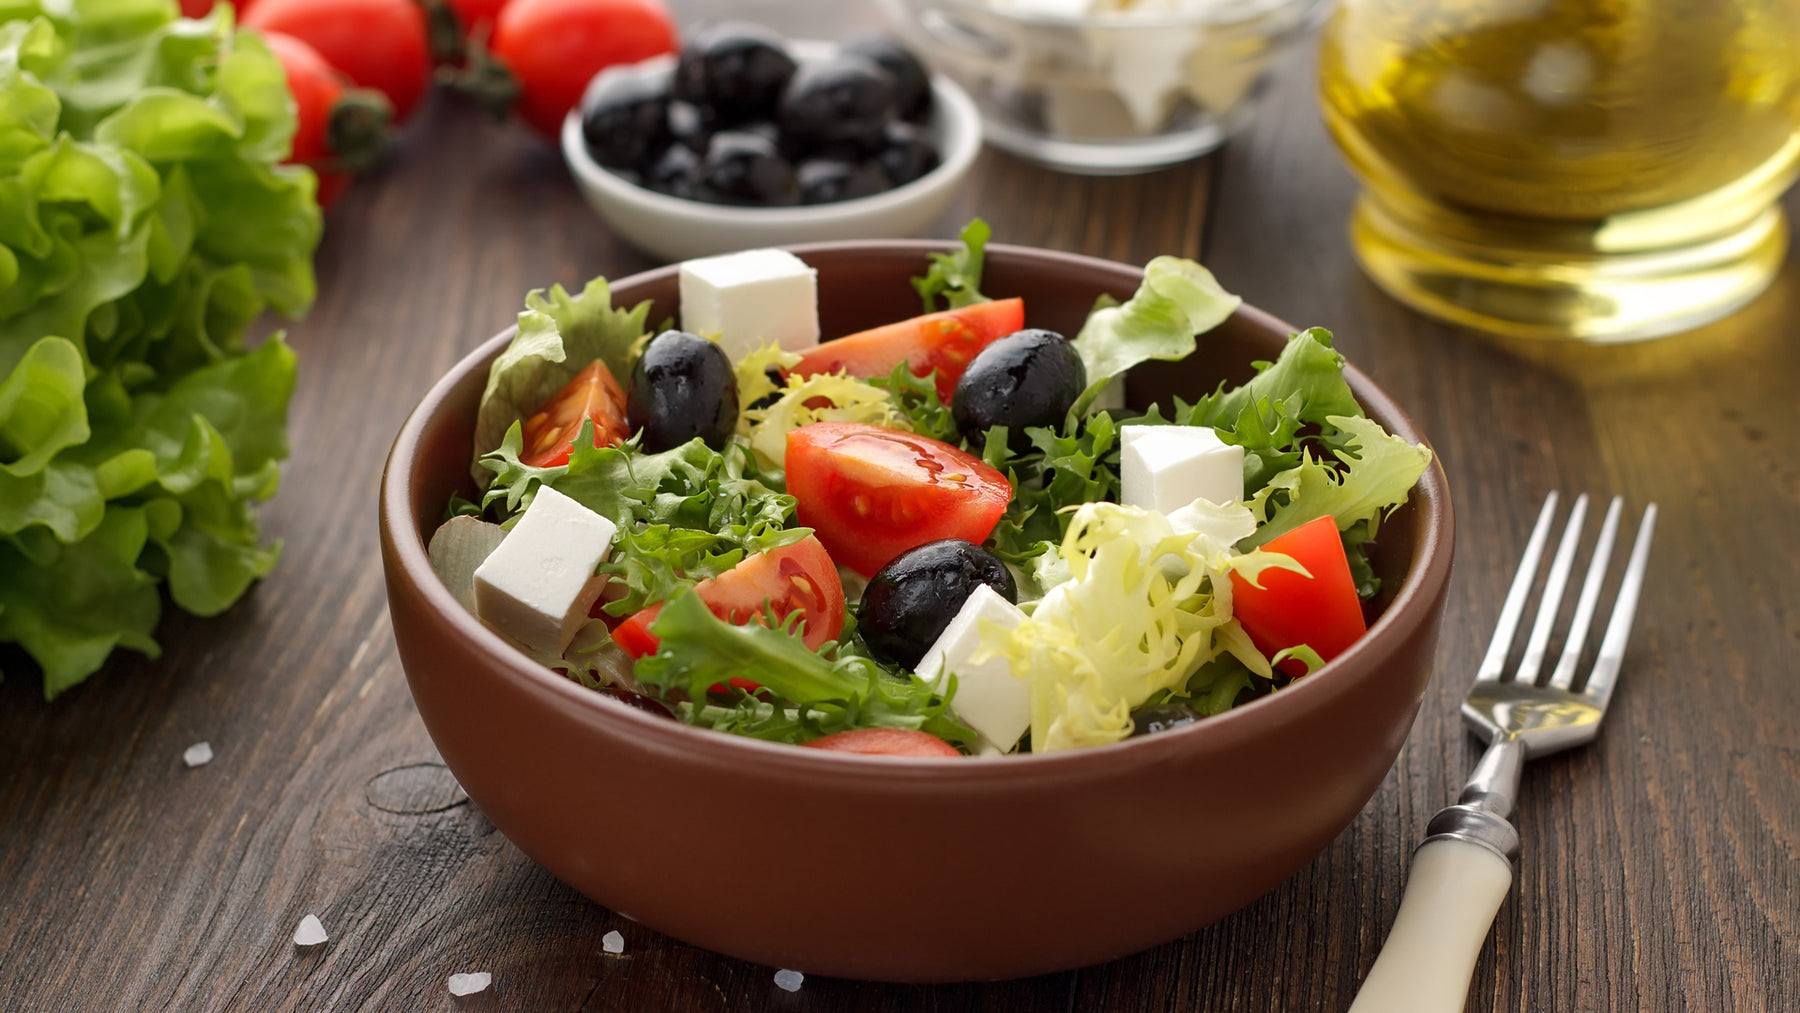 10 Best Keto Salad Recipes To Make